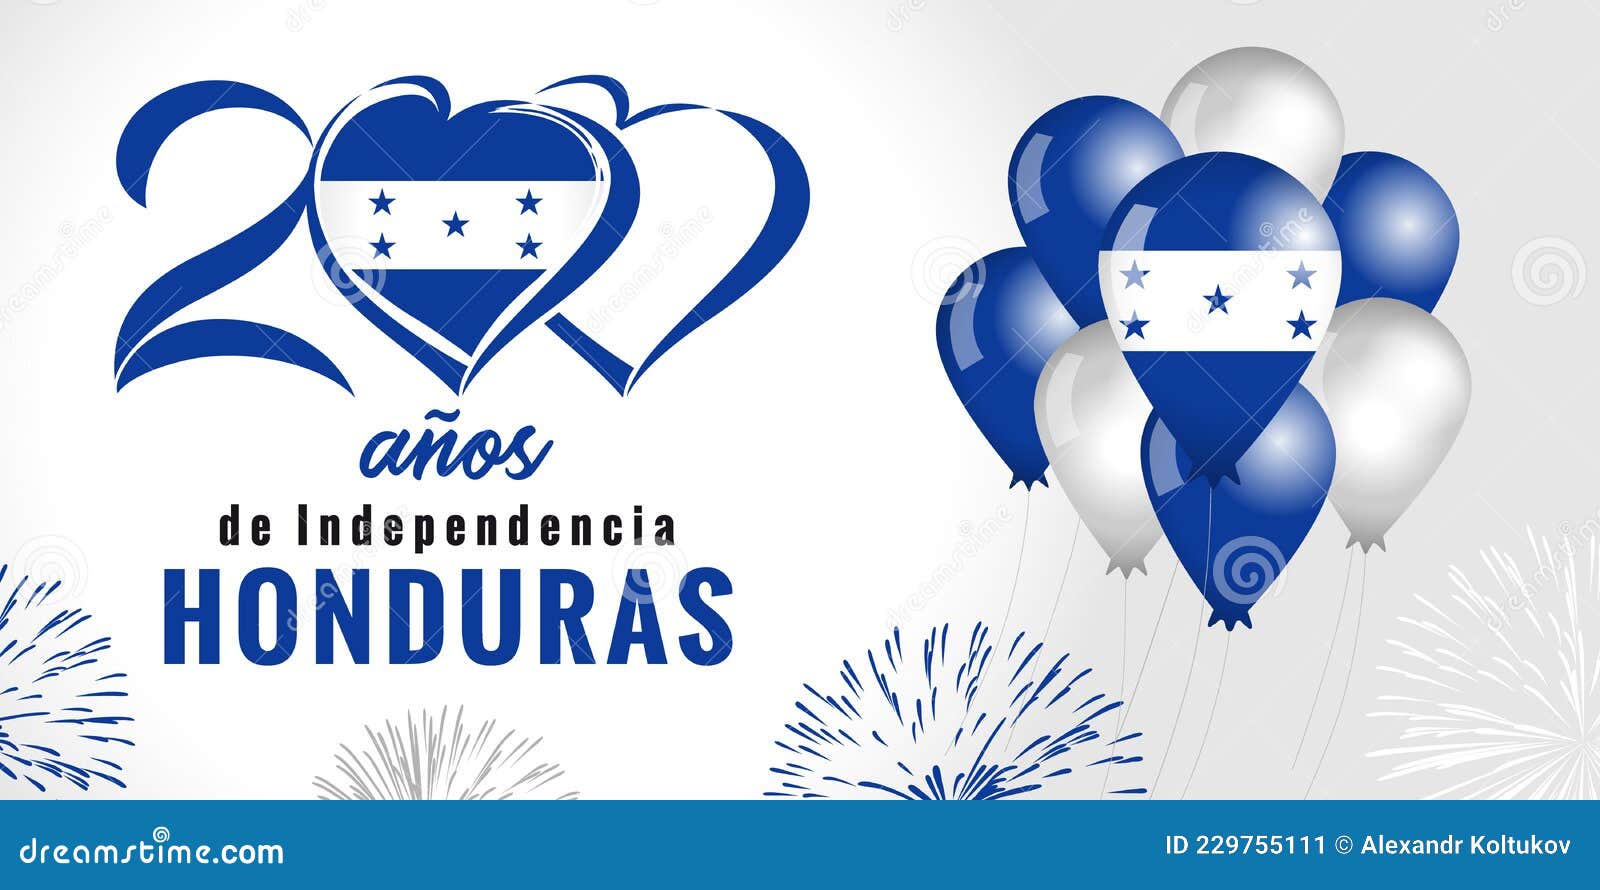 200 anos anniversary indepedencia honduras, fireworks and balloons